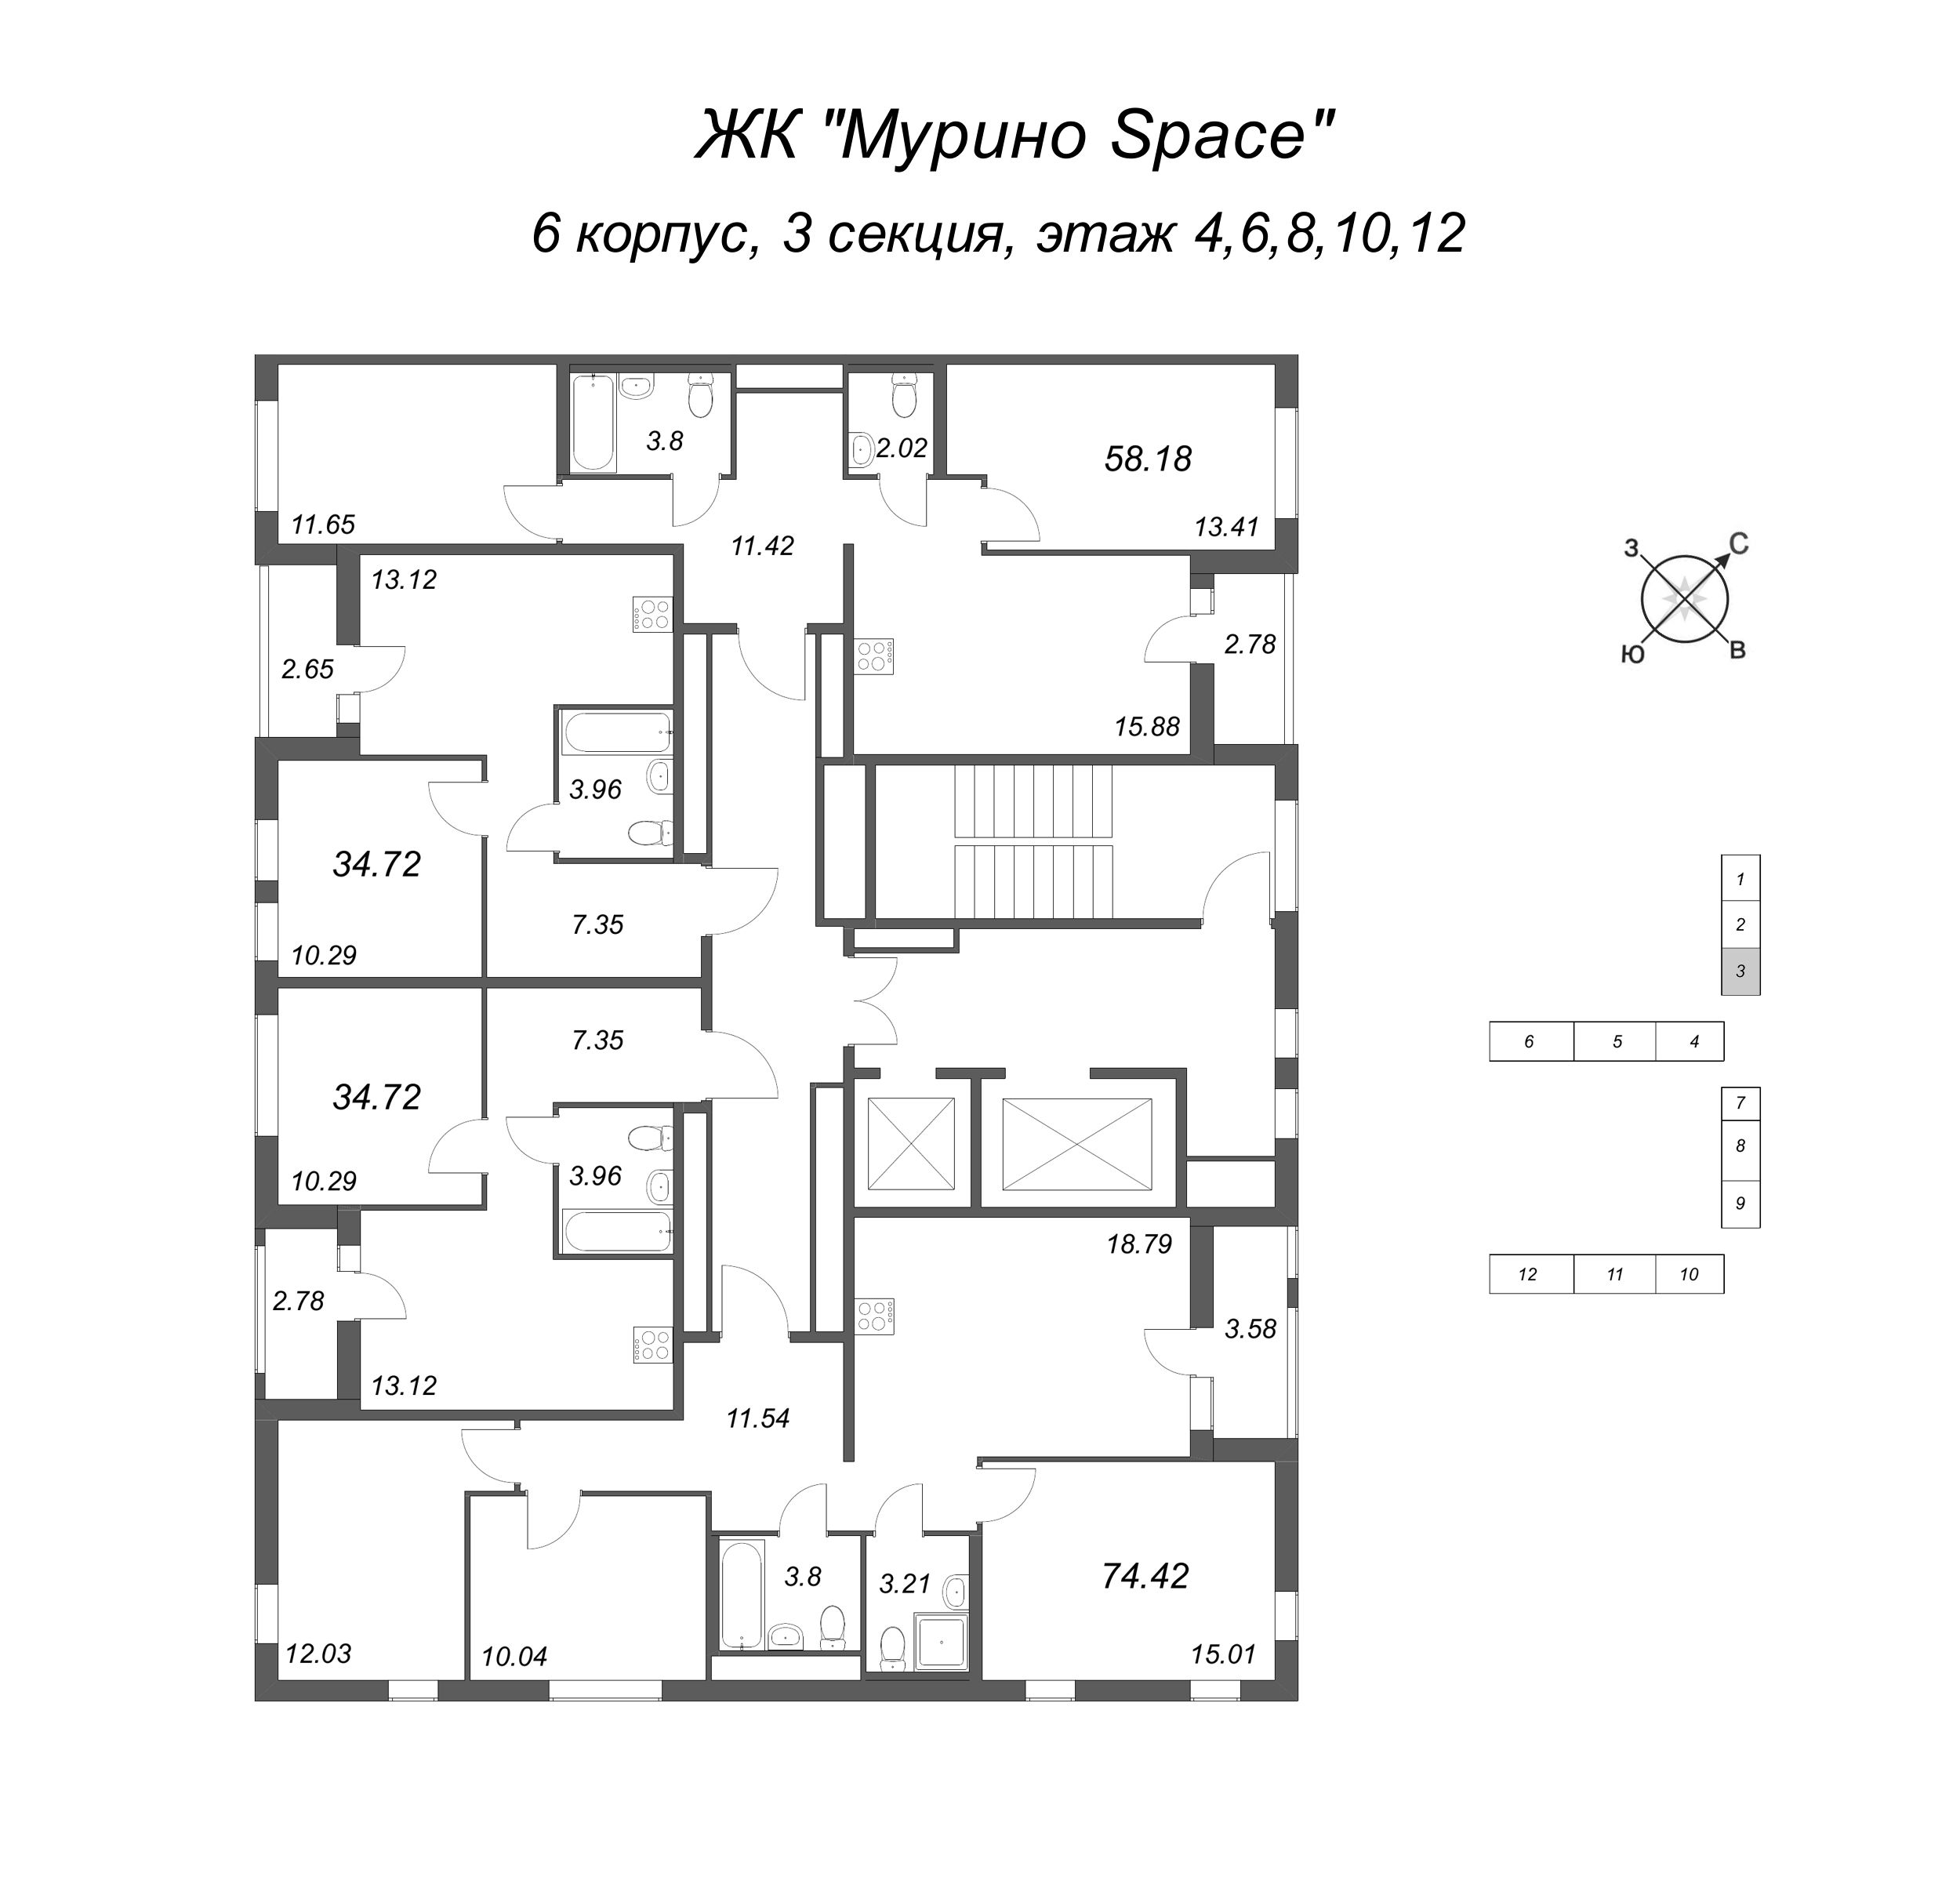 4-комнатная (Евро) квартира, 74.42 м² - планировка этажа